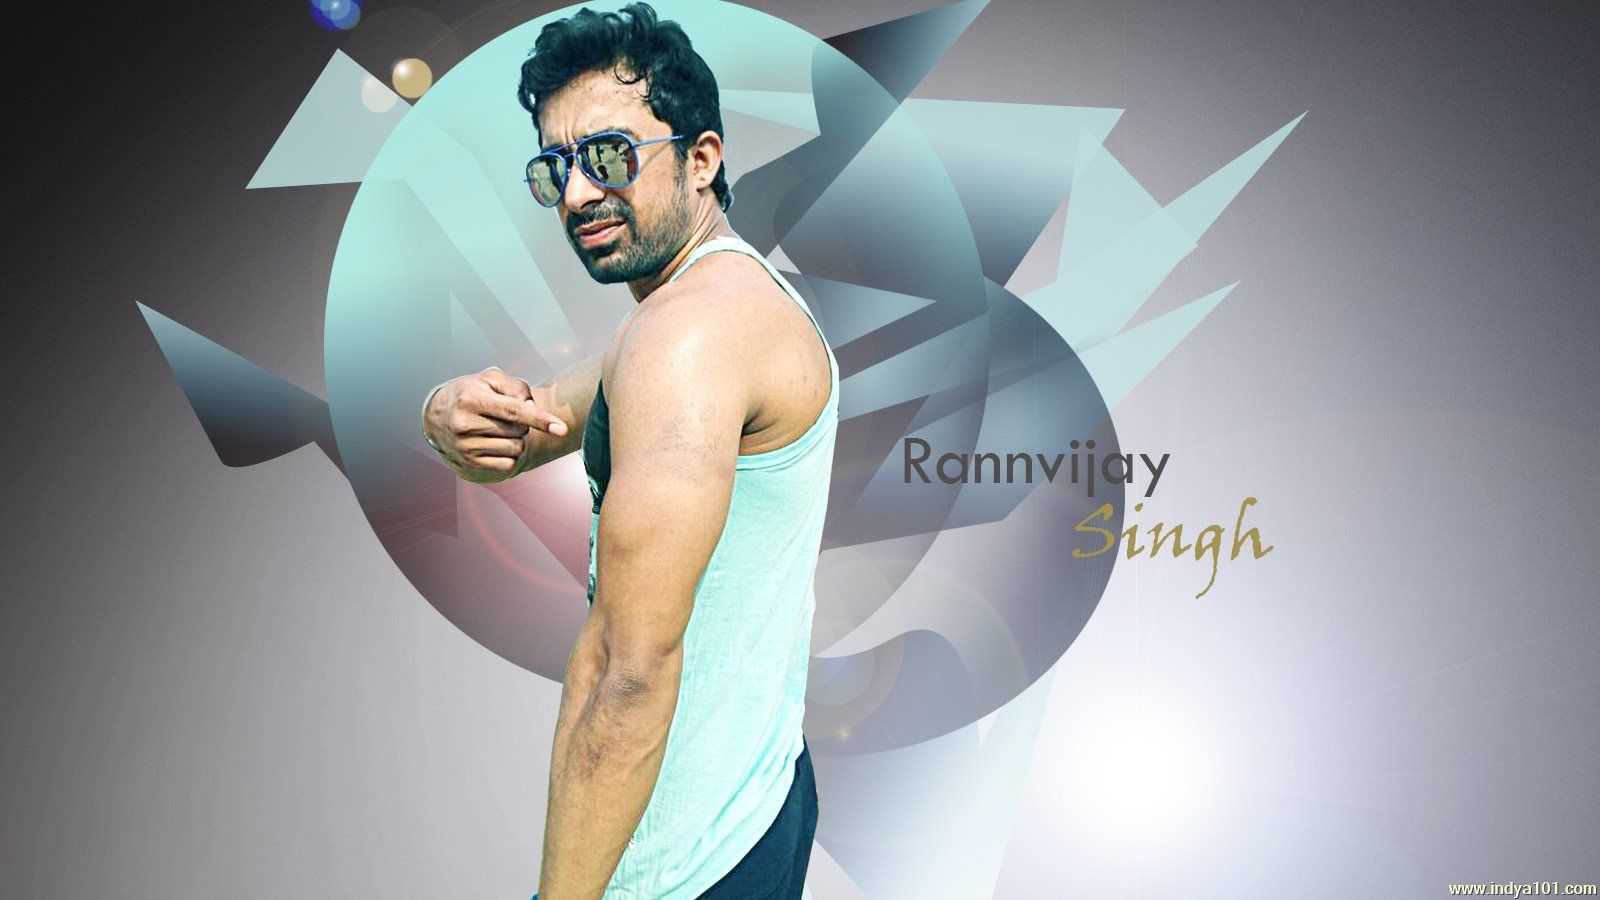 Rannvijay Singh wallpaper - (1600x900), Indya101.com